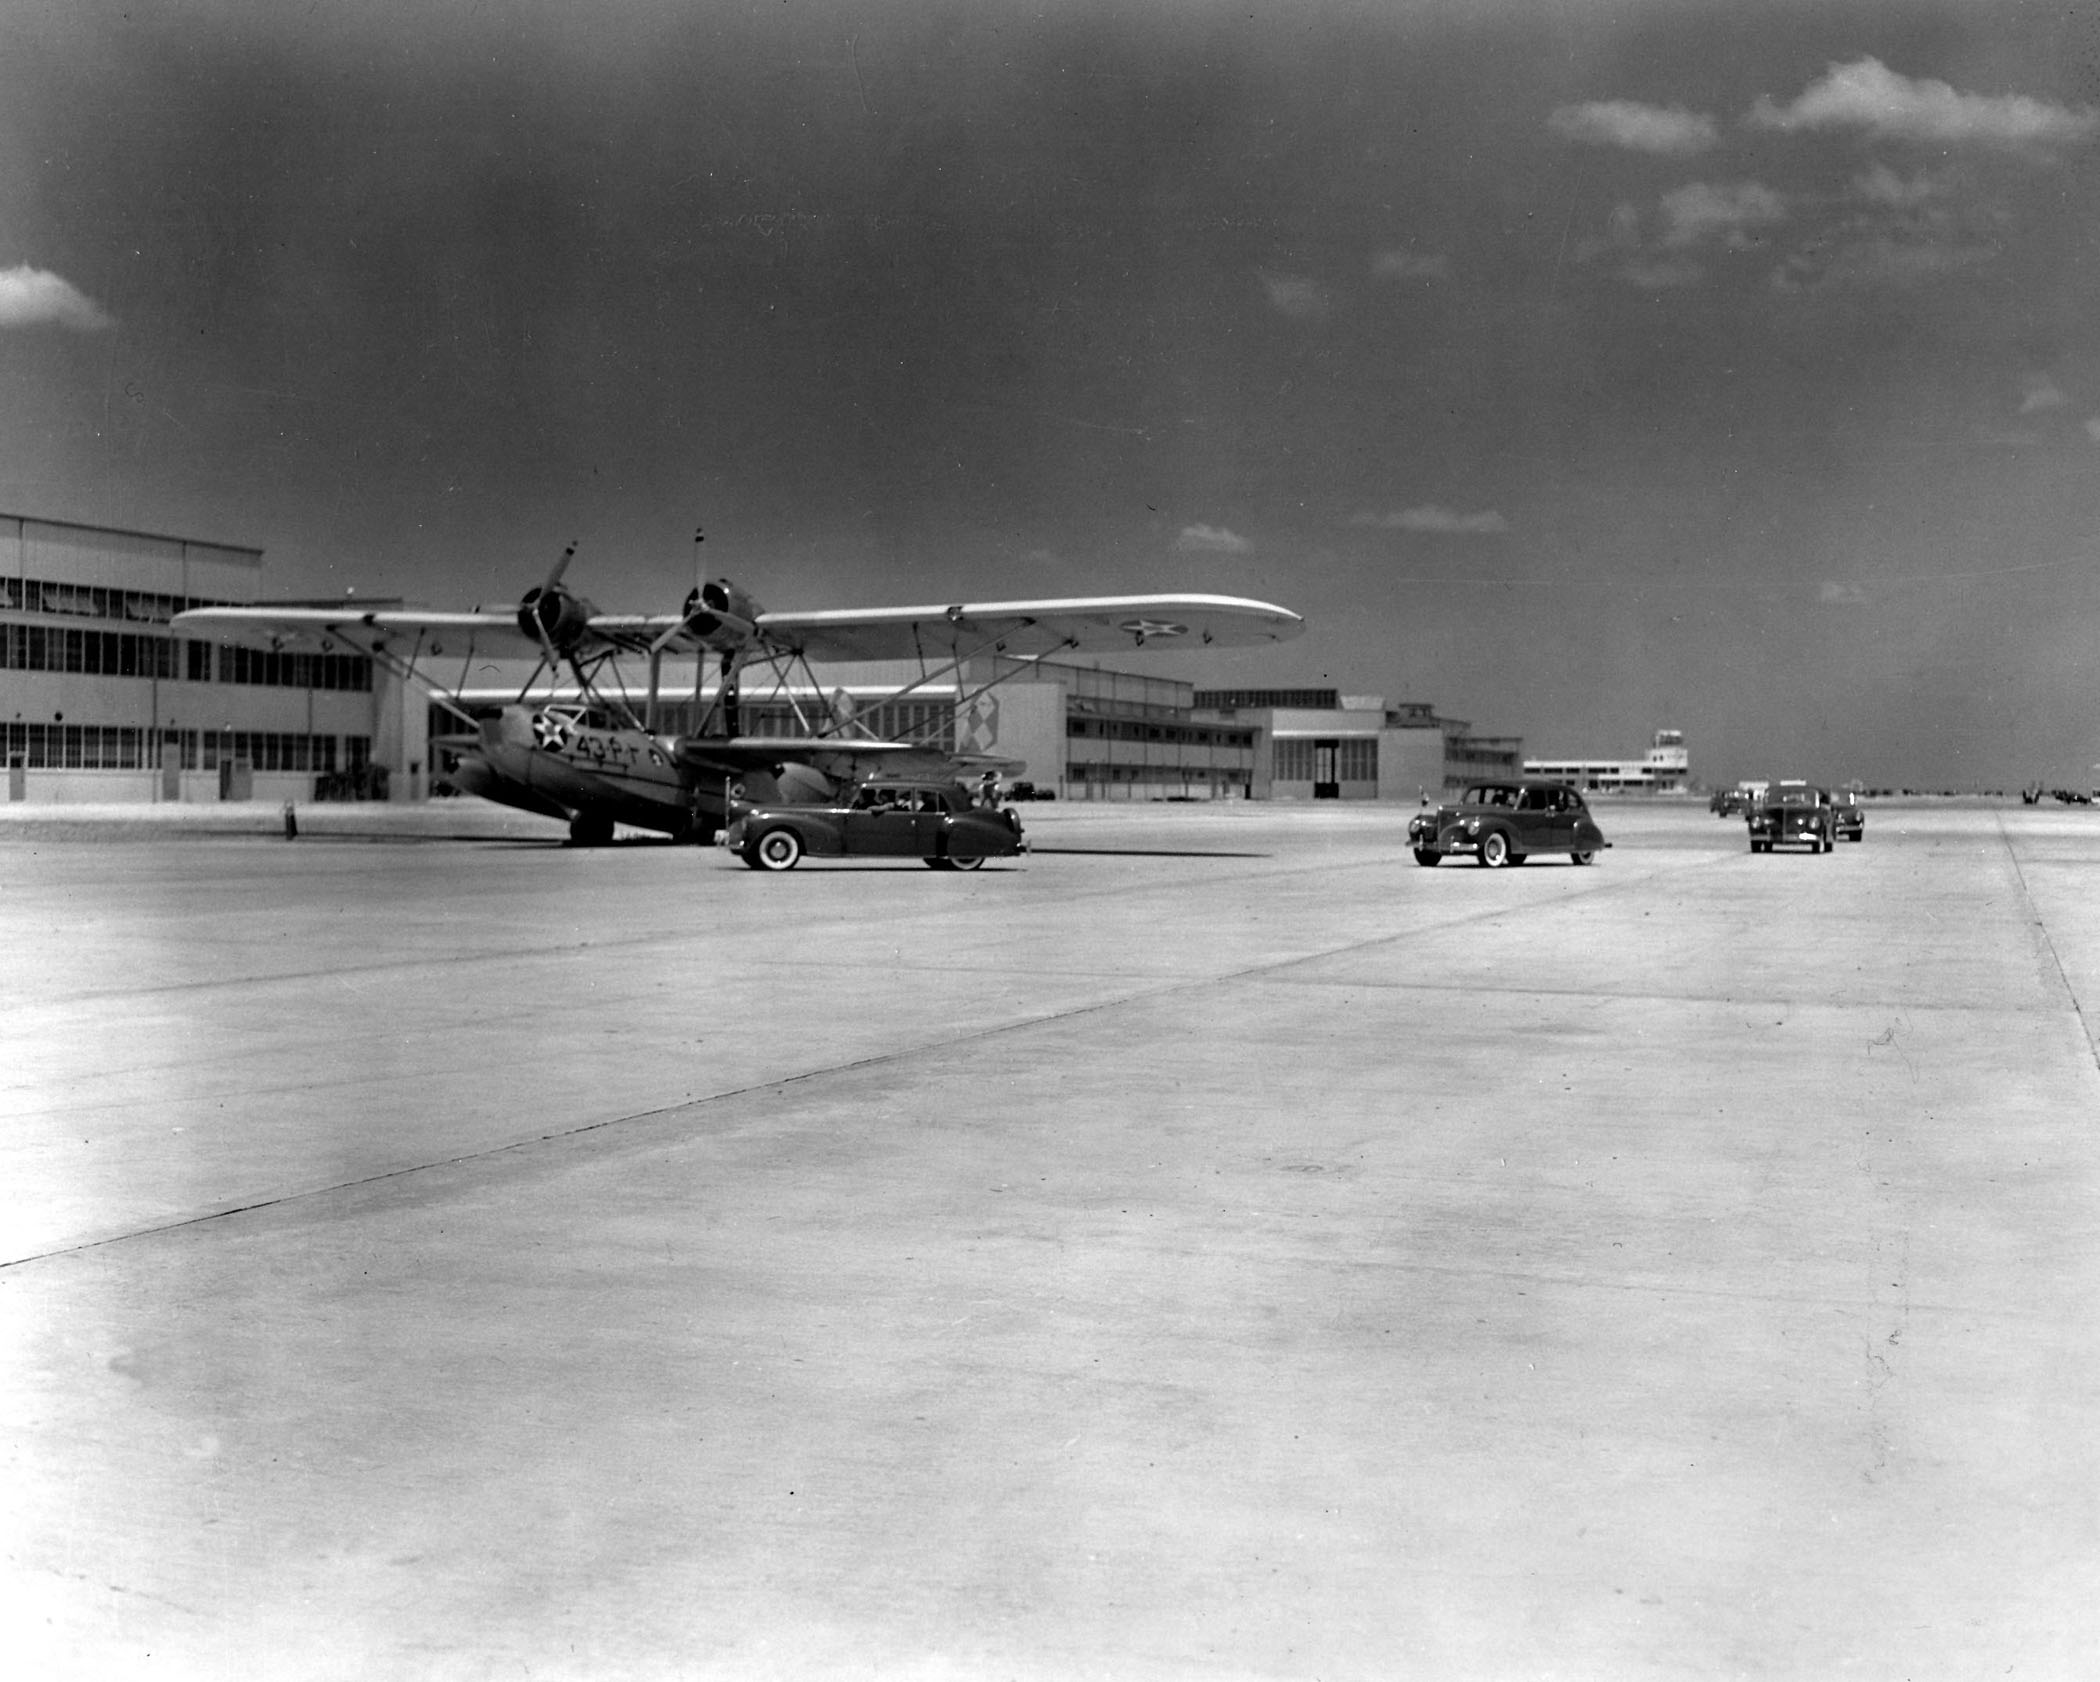 P2Y-3 aircraft of US Navy squadron VP-43 at Naval Air Station Jacksonville, Florida, United States, Jan-Jul 1941